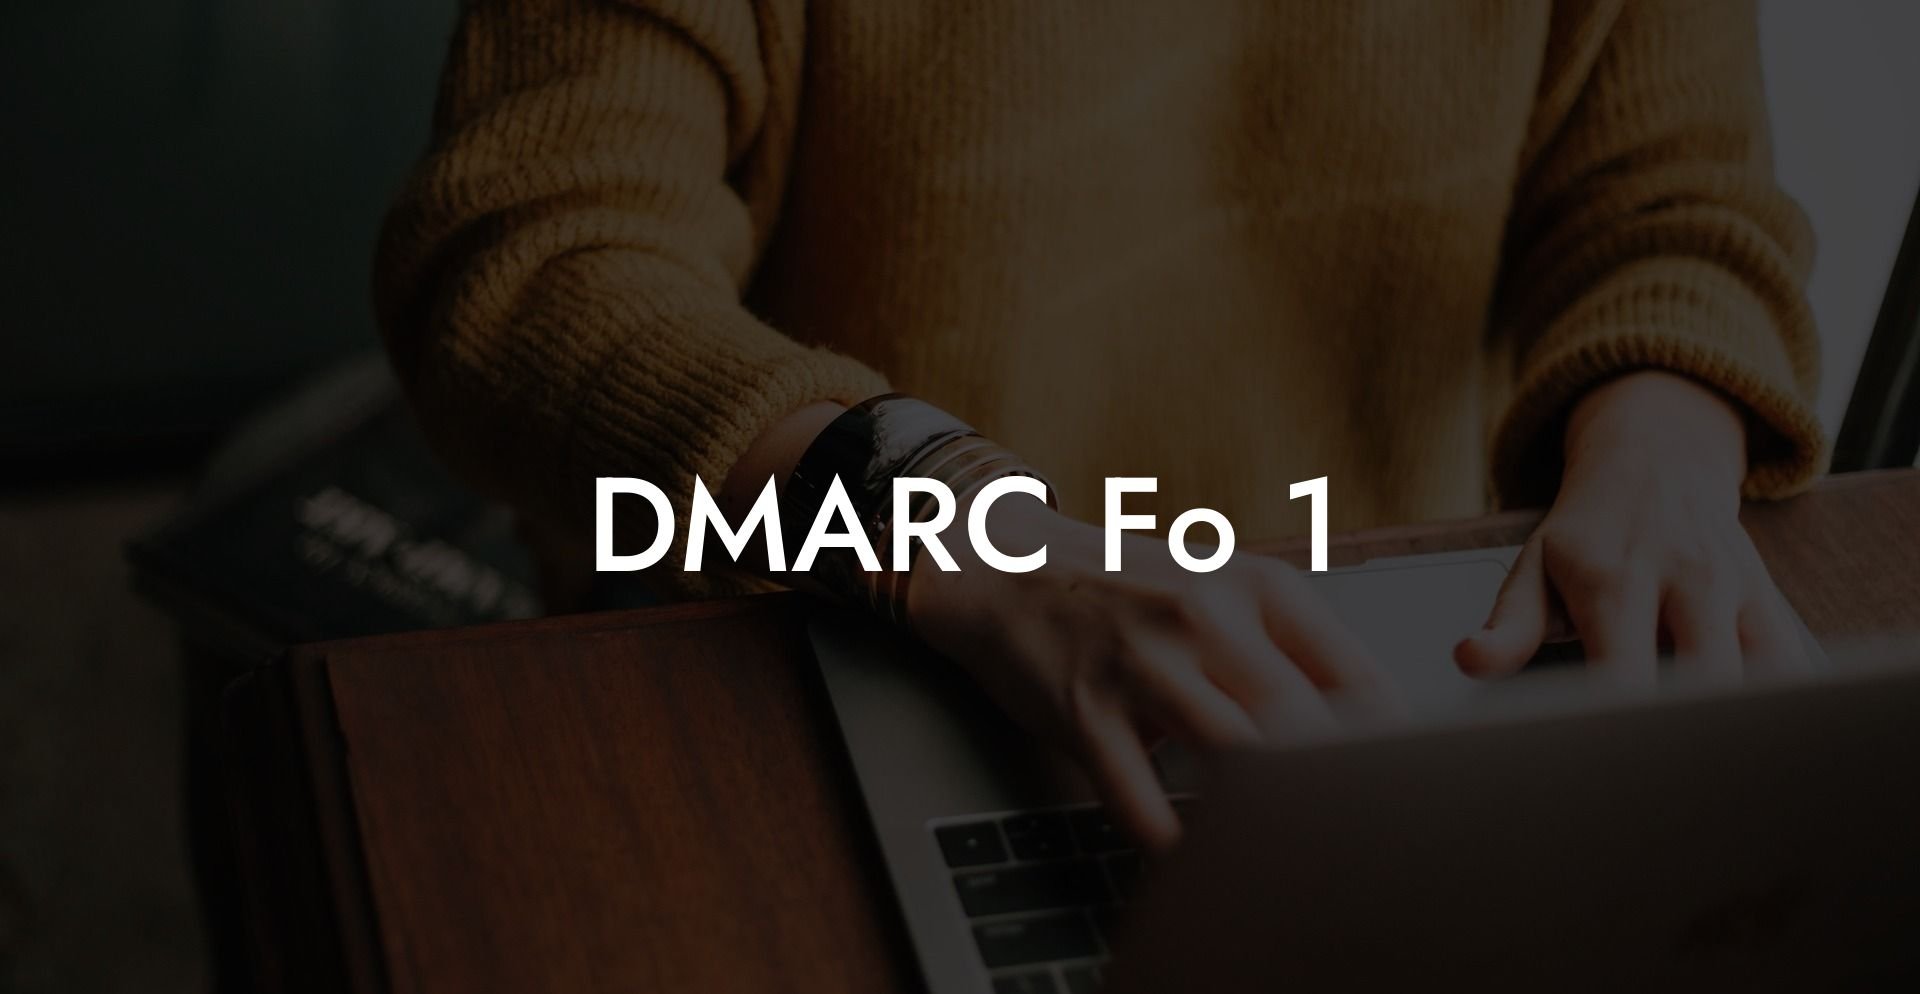 DMARC Fo 1